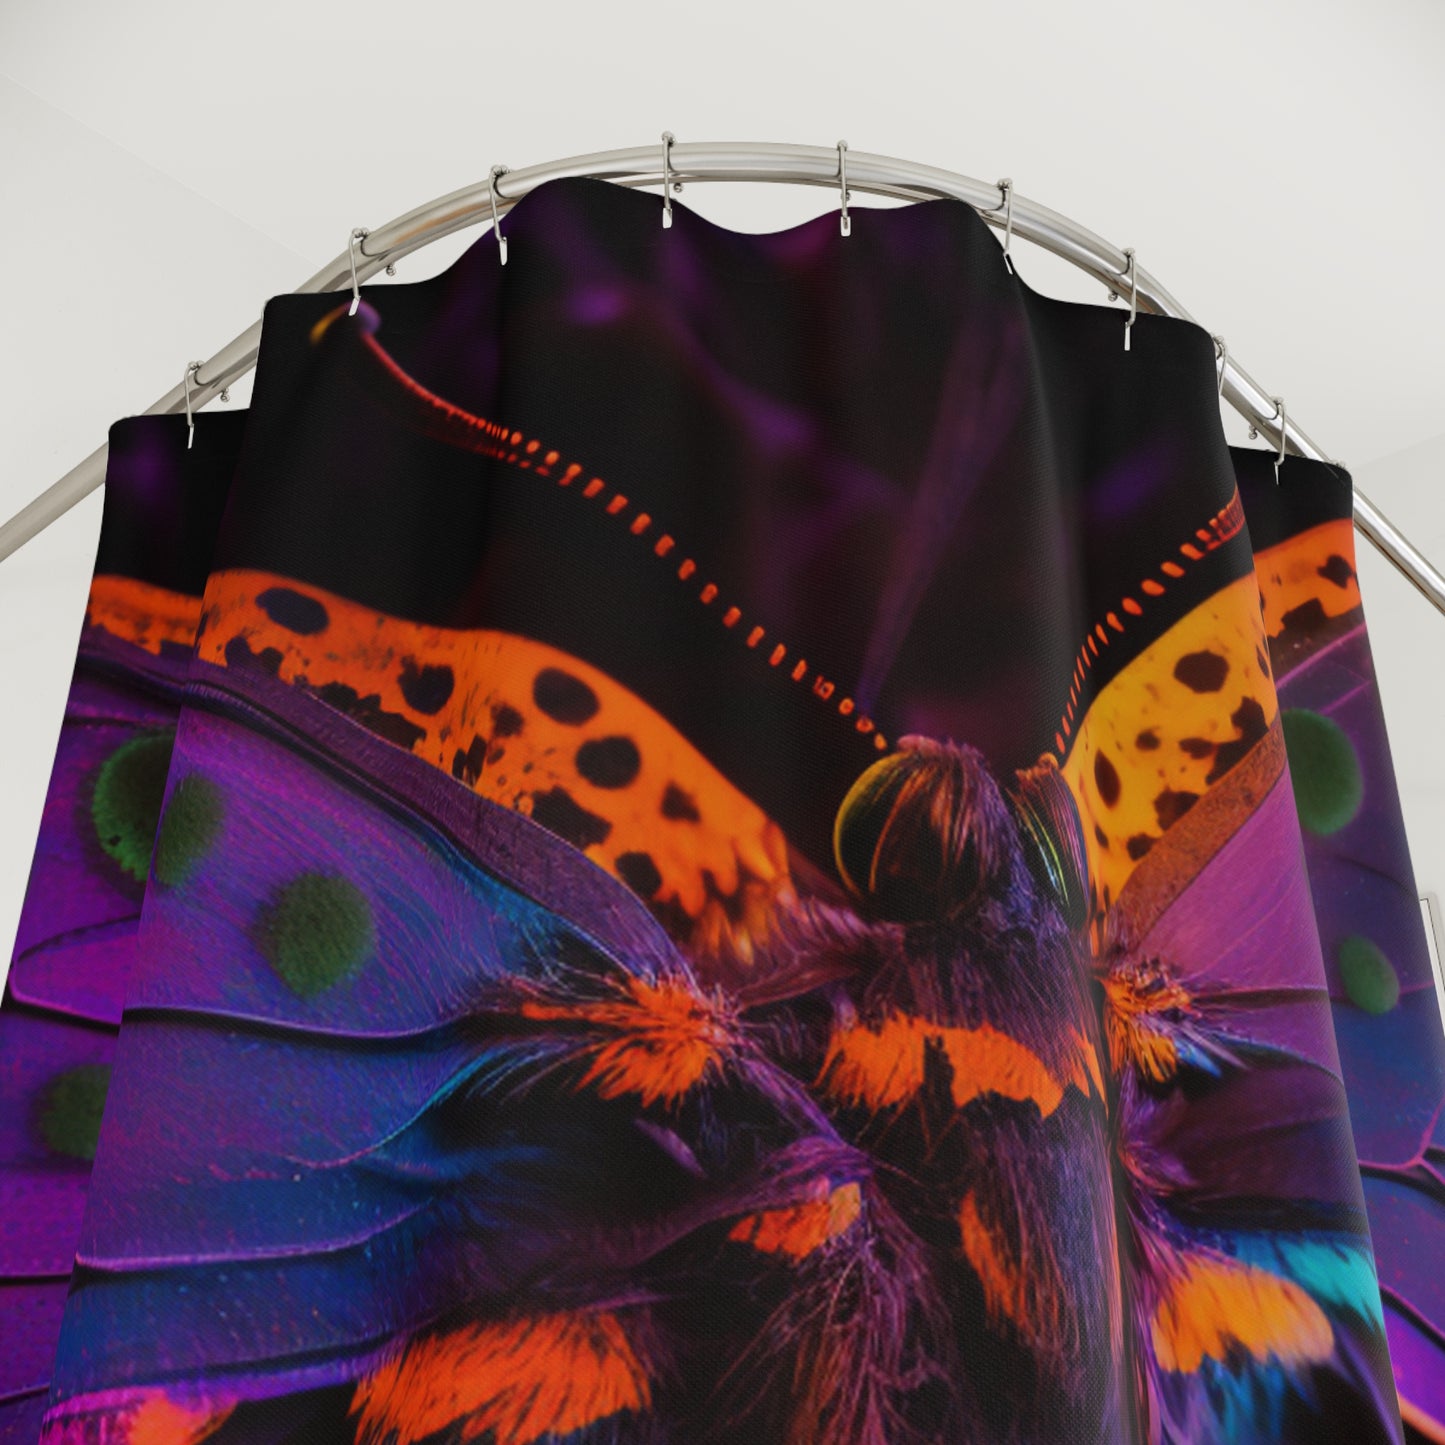 Polyester Shower Curtain Florescent Butterfly Fluttering 3